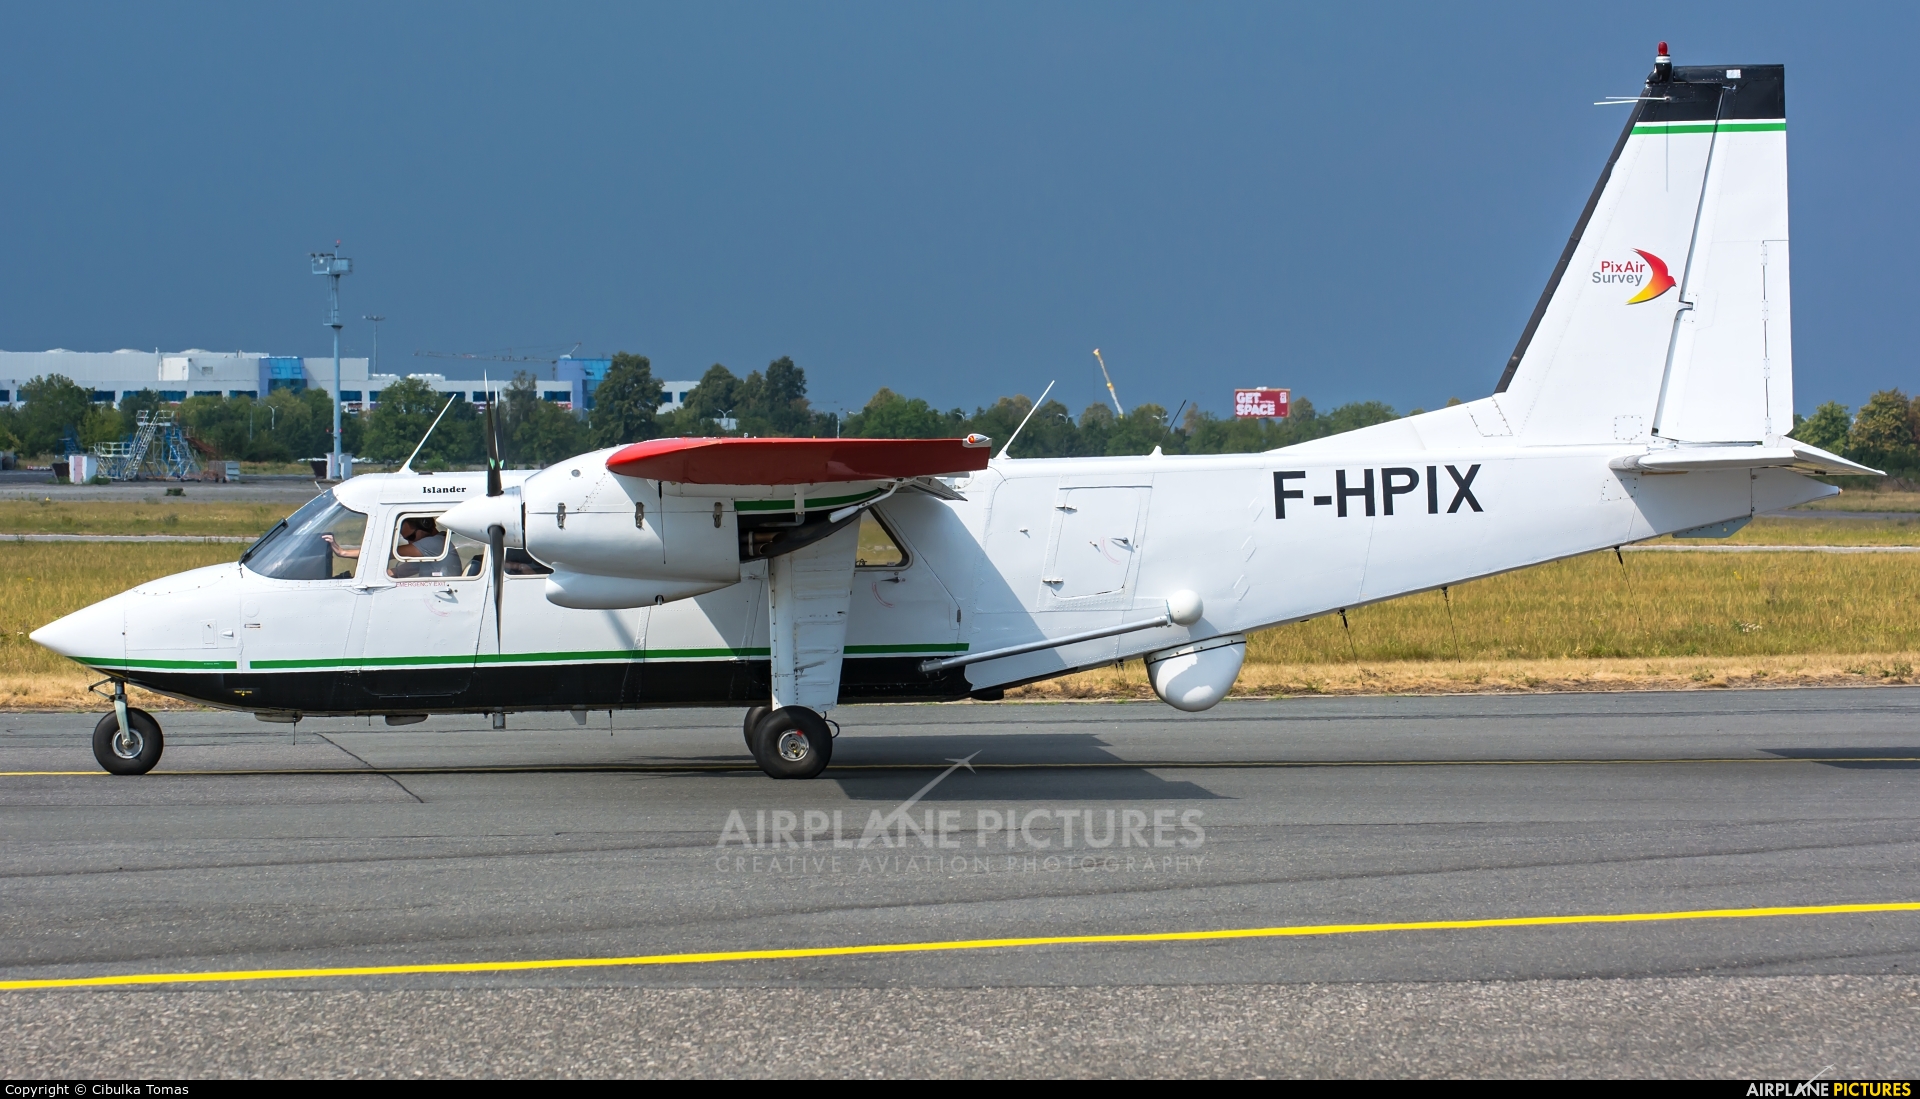 PixAir Survey F-HPIX aircraft at Prague - Václav Havel